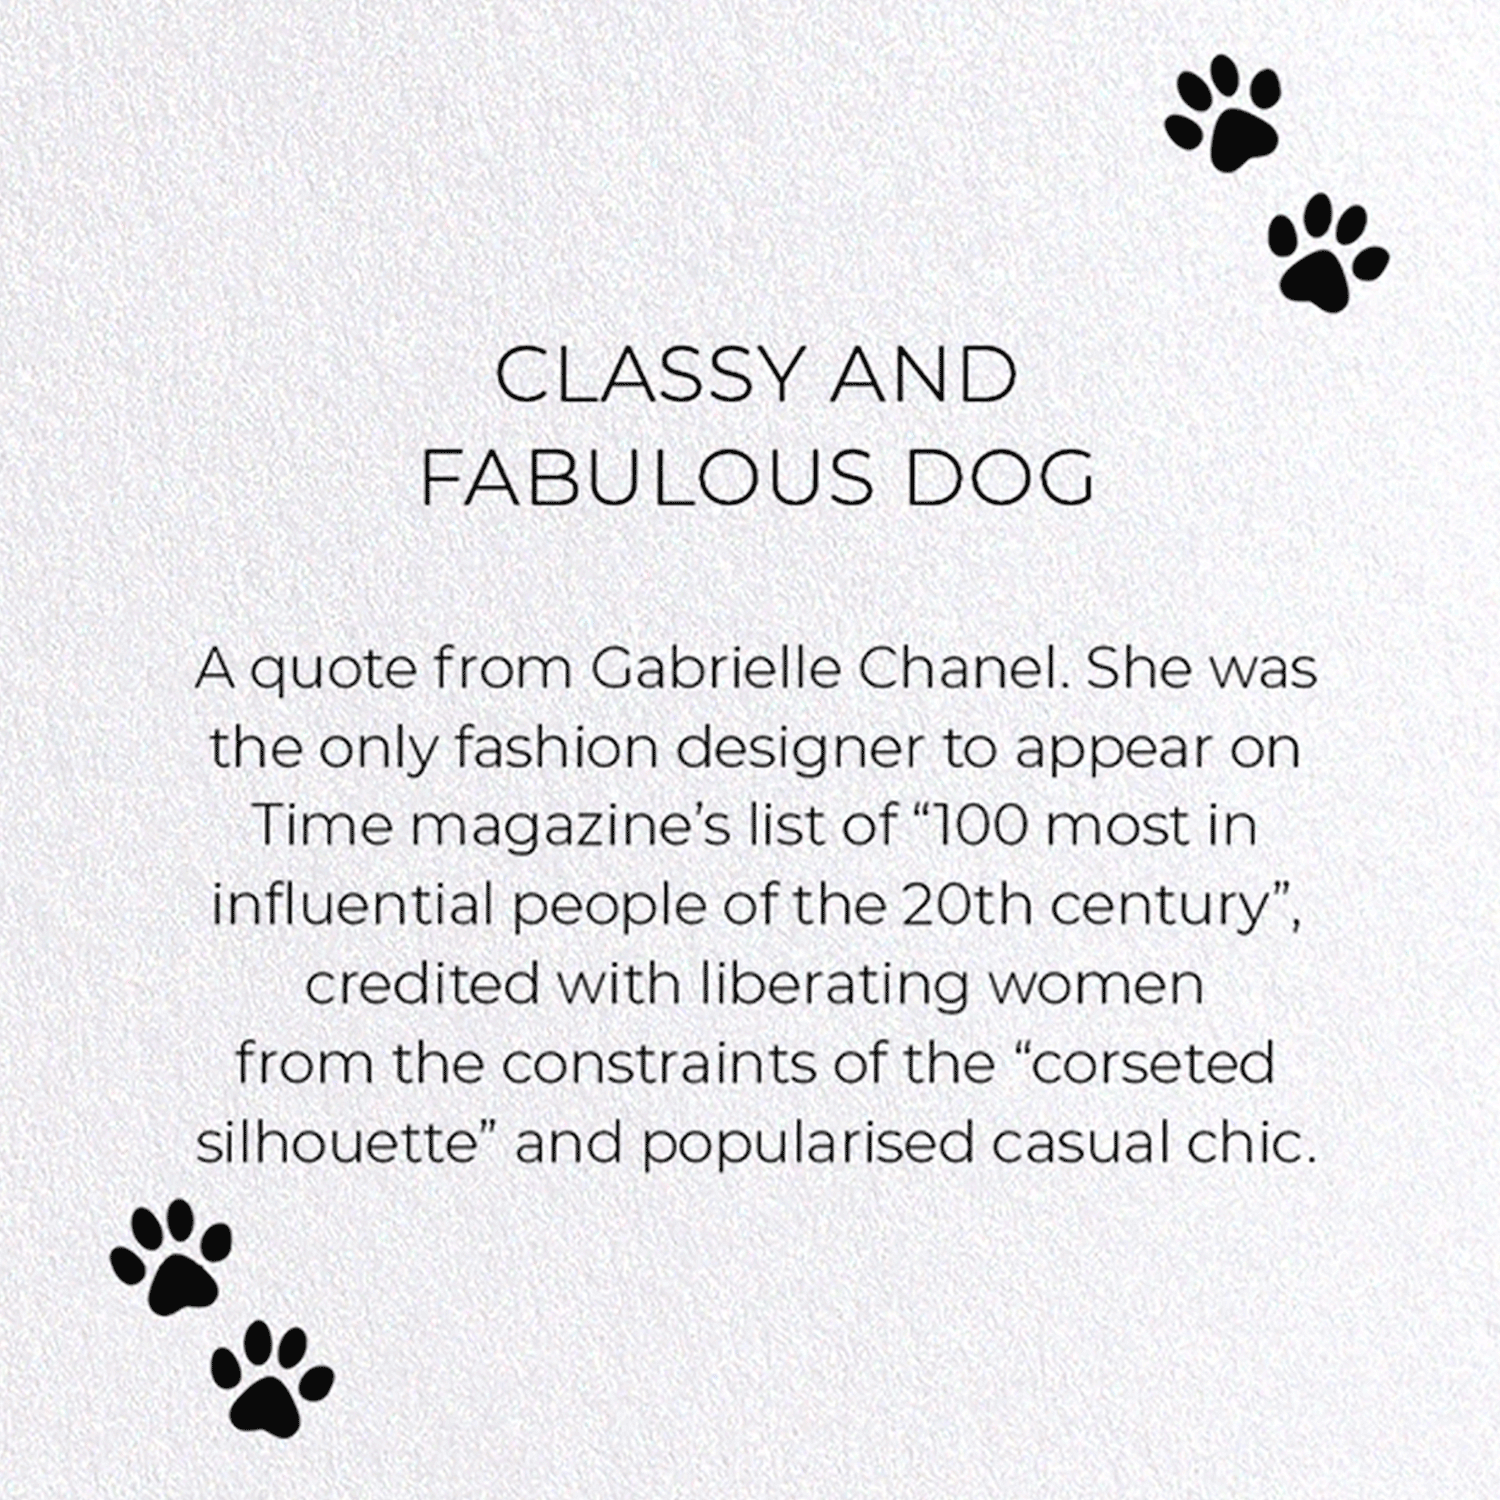 CLASSY AND FABULOUS DOG